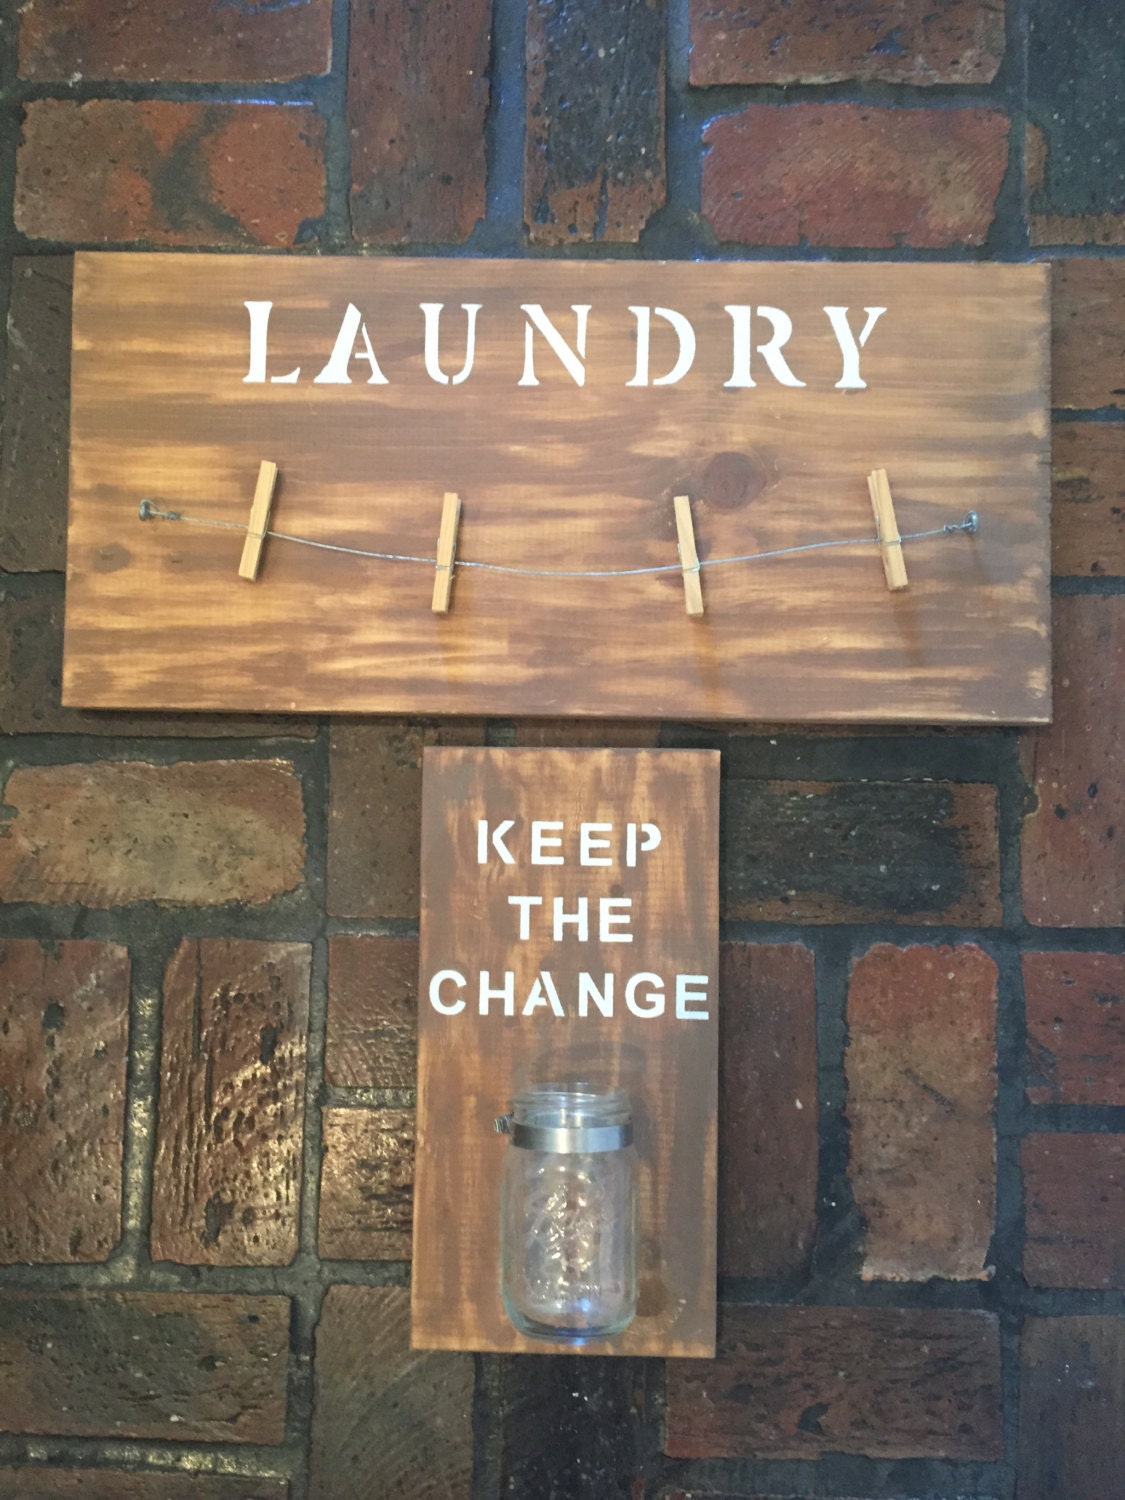 laundry-room-decor-by-southernwayofthinkin-on-etsy